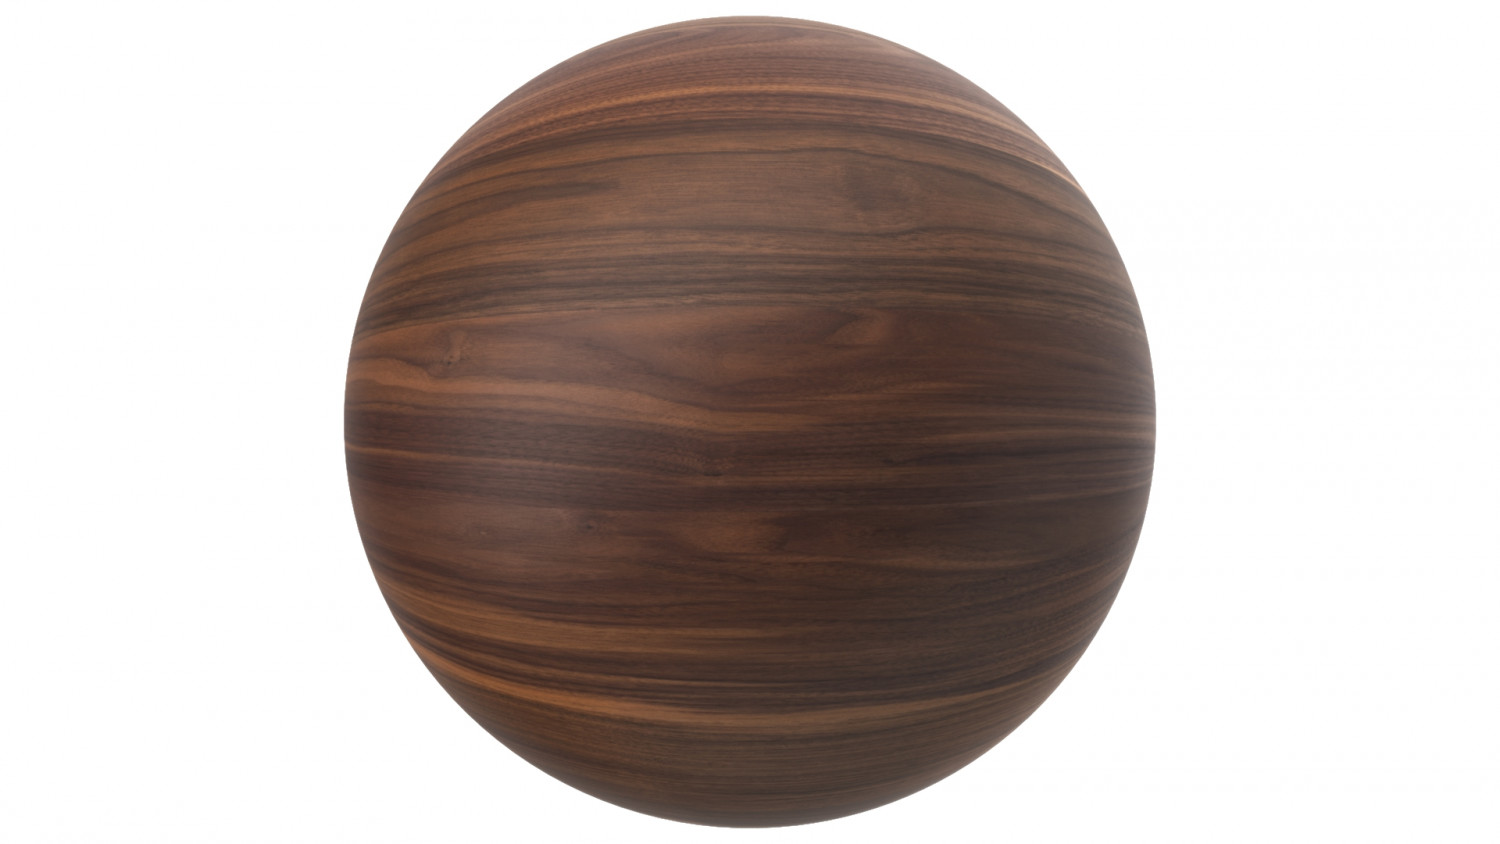 Walnut wood veneer texture